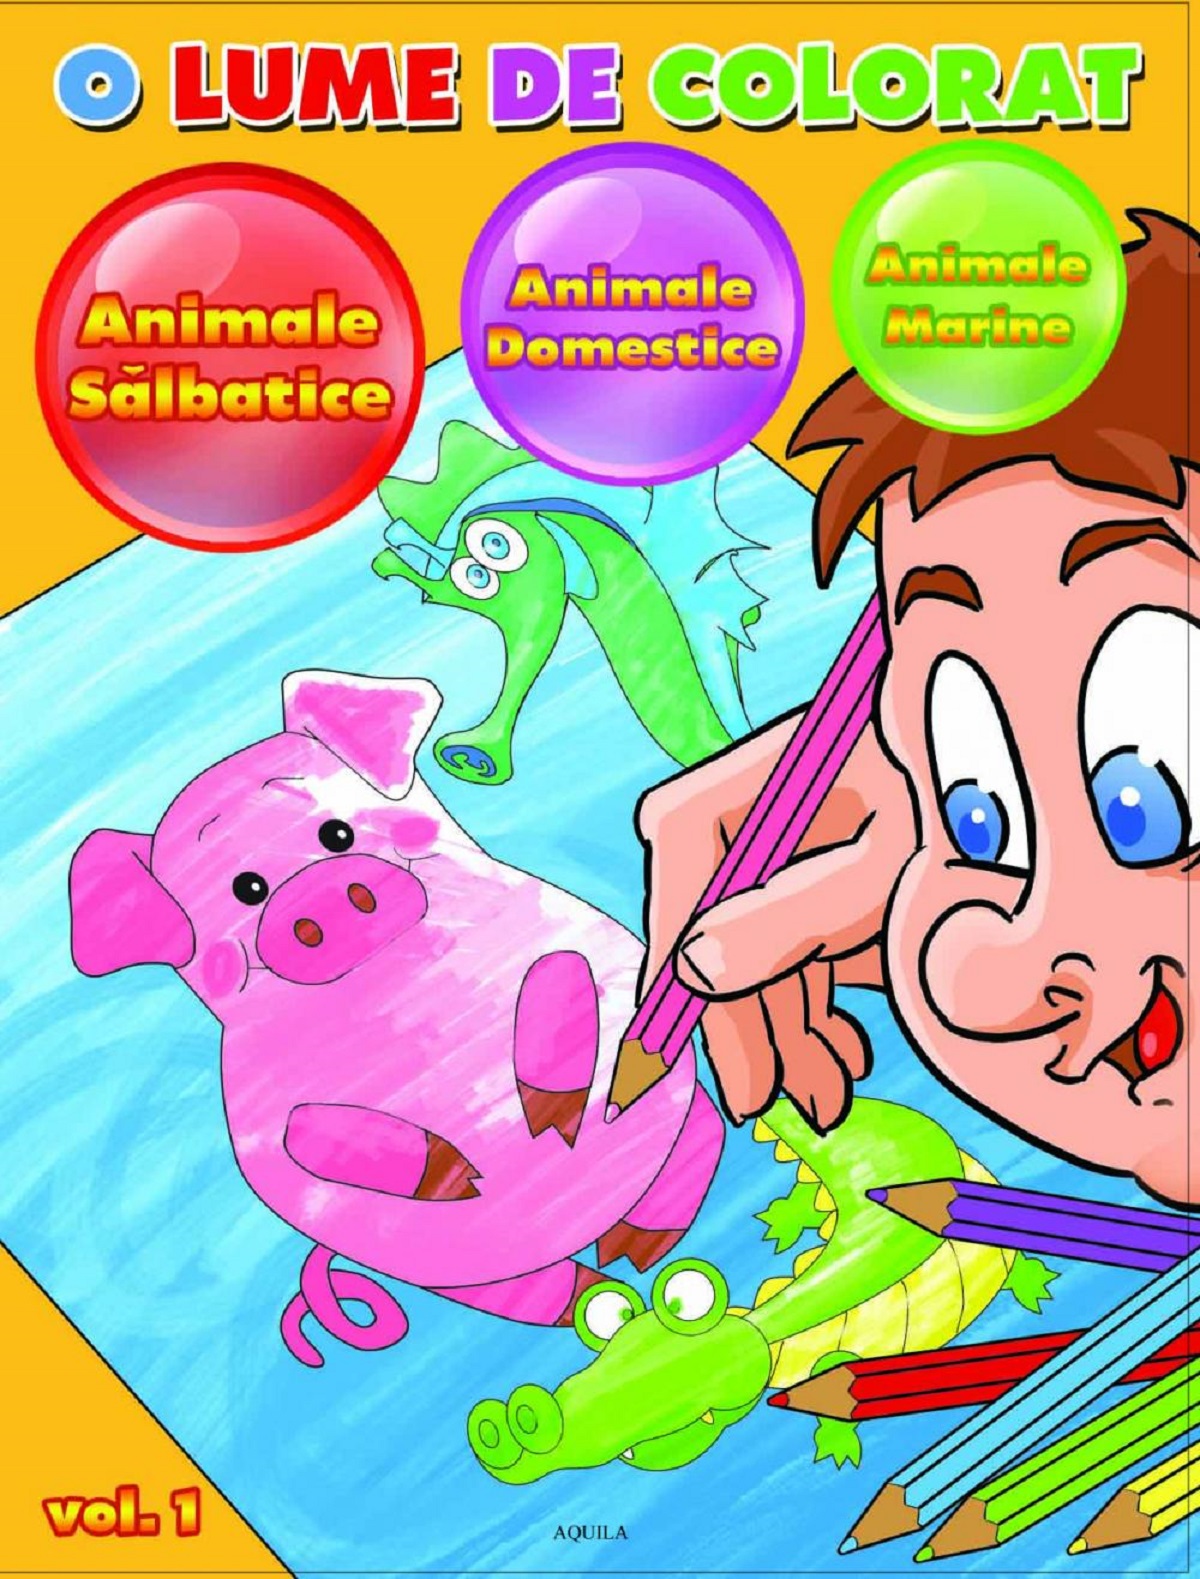 O lume de colorat Vol.1: Animale salbatice, animale domestice, animale marine